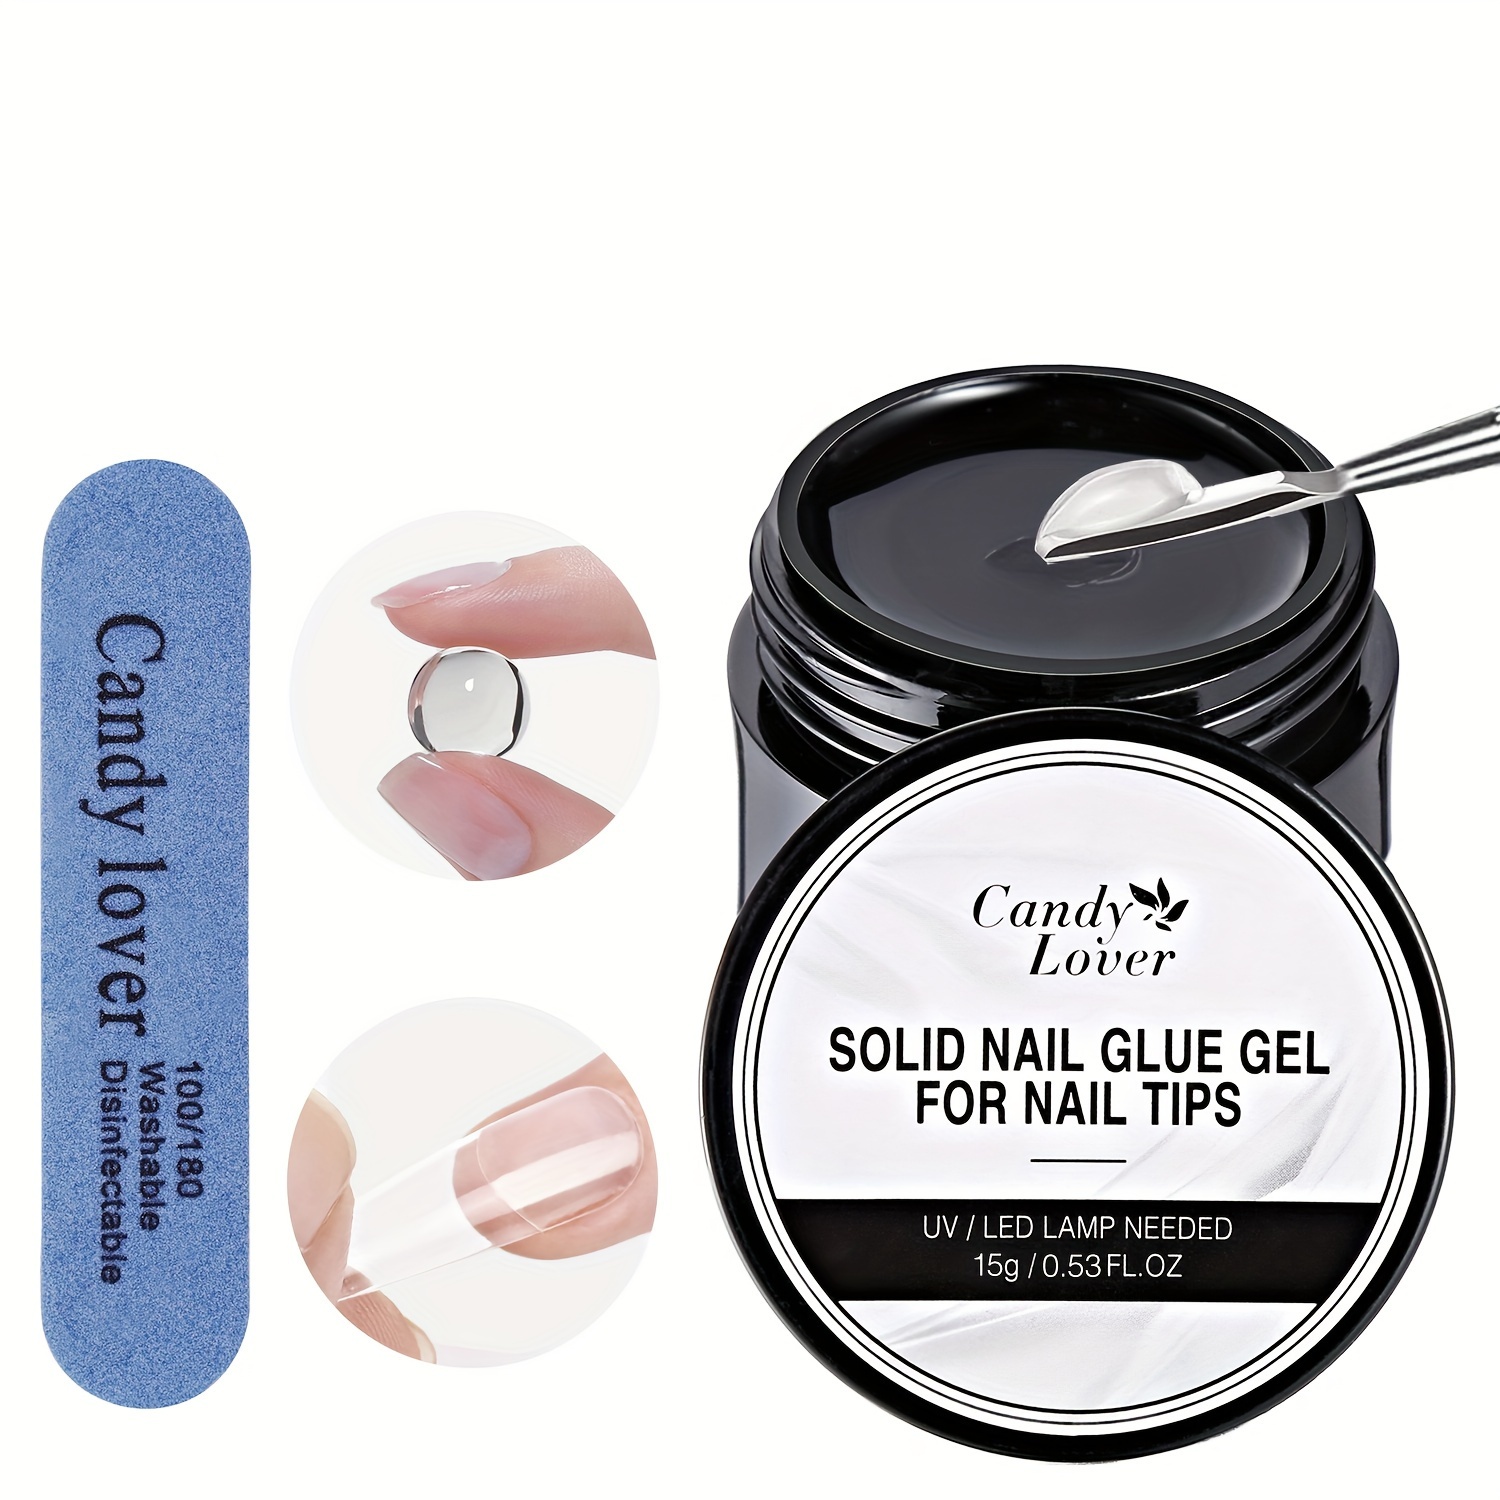 

Solid Nail Glue Gel - 30g Gap-filled Gel Nail Glue For Nail Tips Press On Nails, Upgrade Cure Needed Uv Nail Glue For Acrylic Nails, Long Lasting Strong Gel Glue For Fake Nails